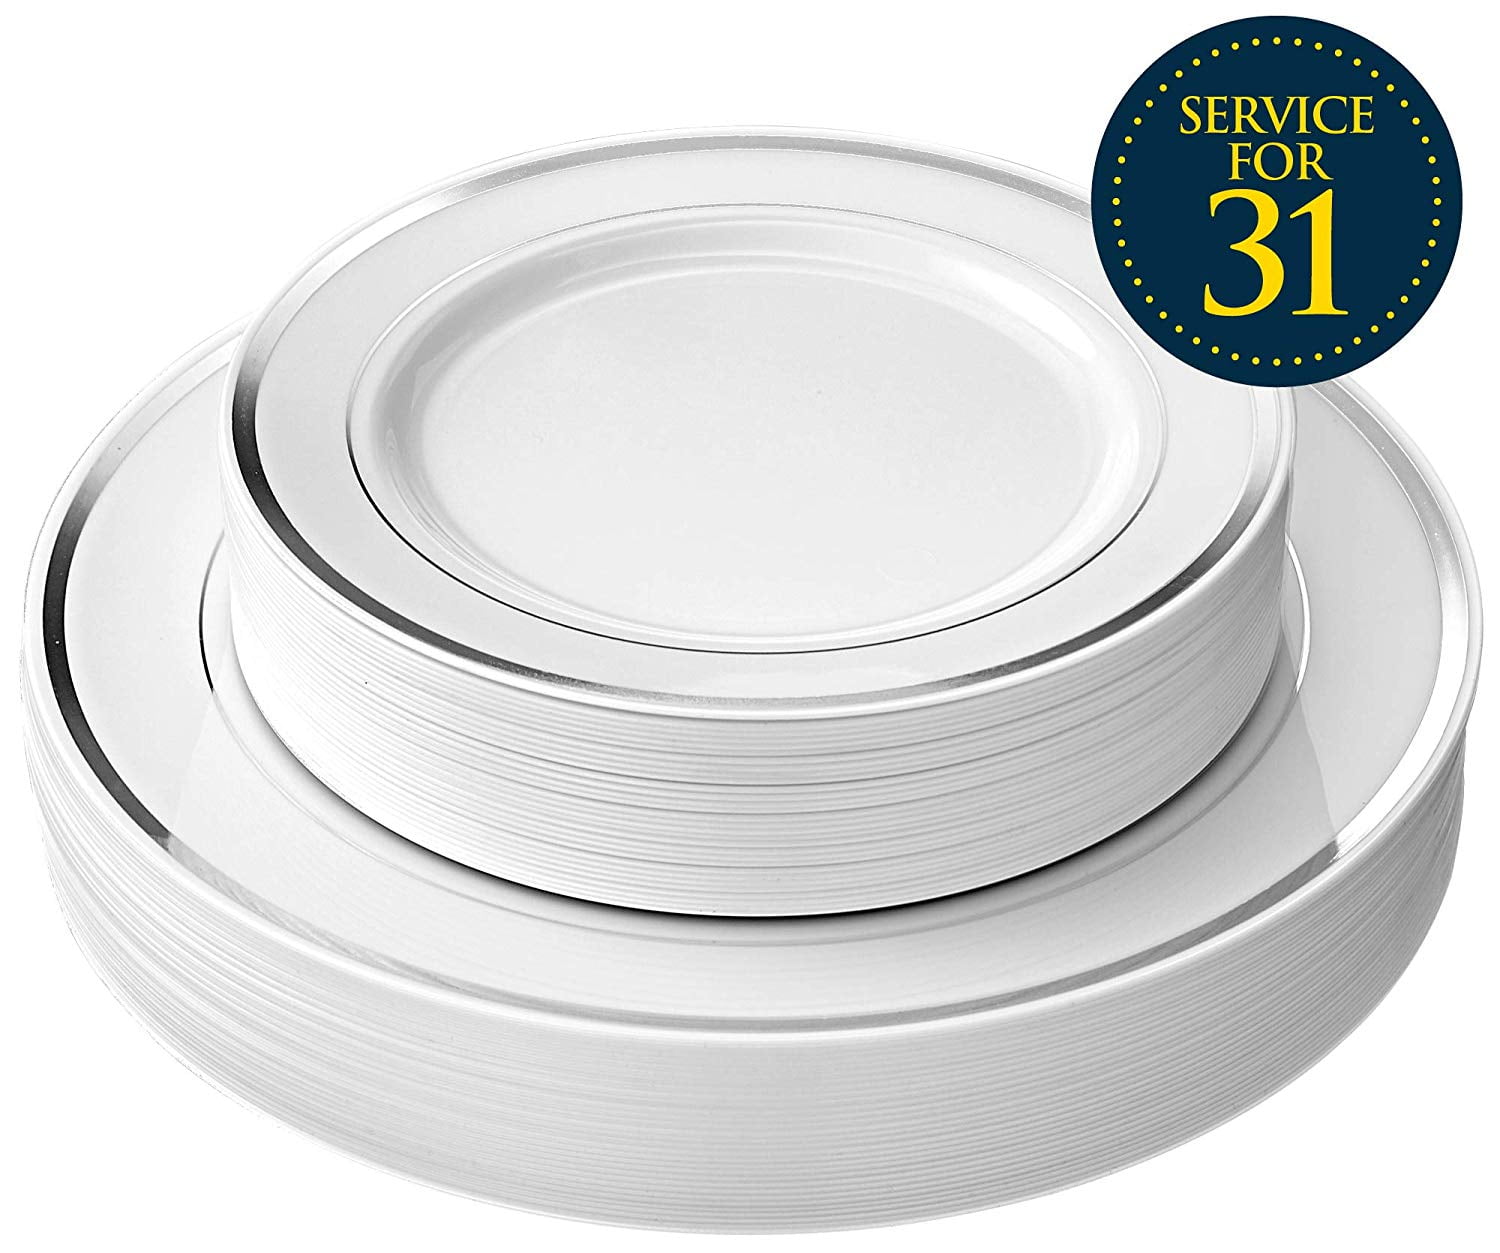 Disposable Plastic Party Plates - 62 Piece Dinnerware Set - 31 Salad